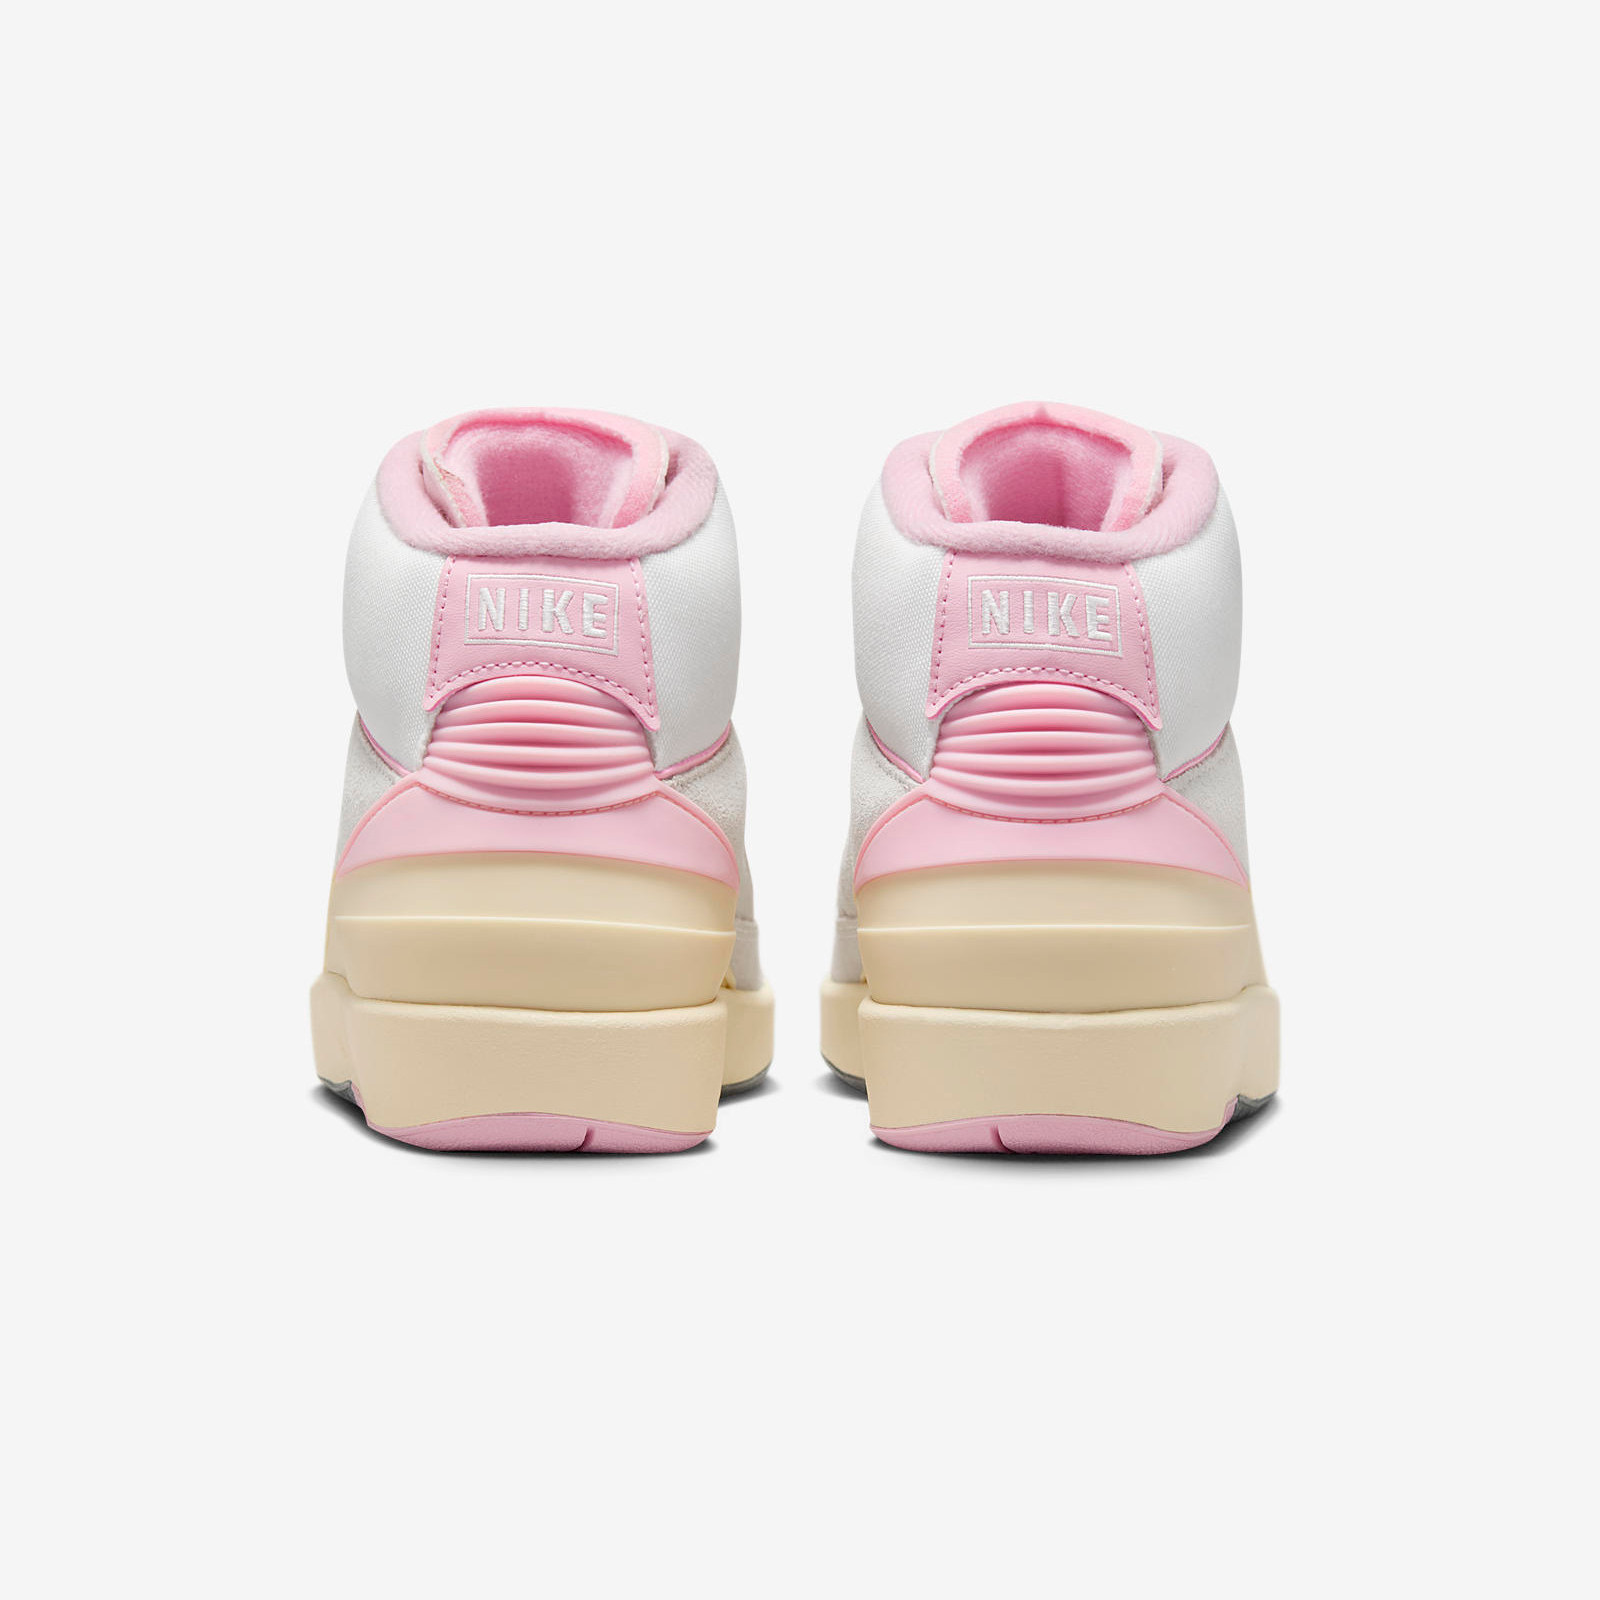 Air Jordan 2 Retro
« Medium Soft Pink »